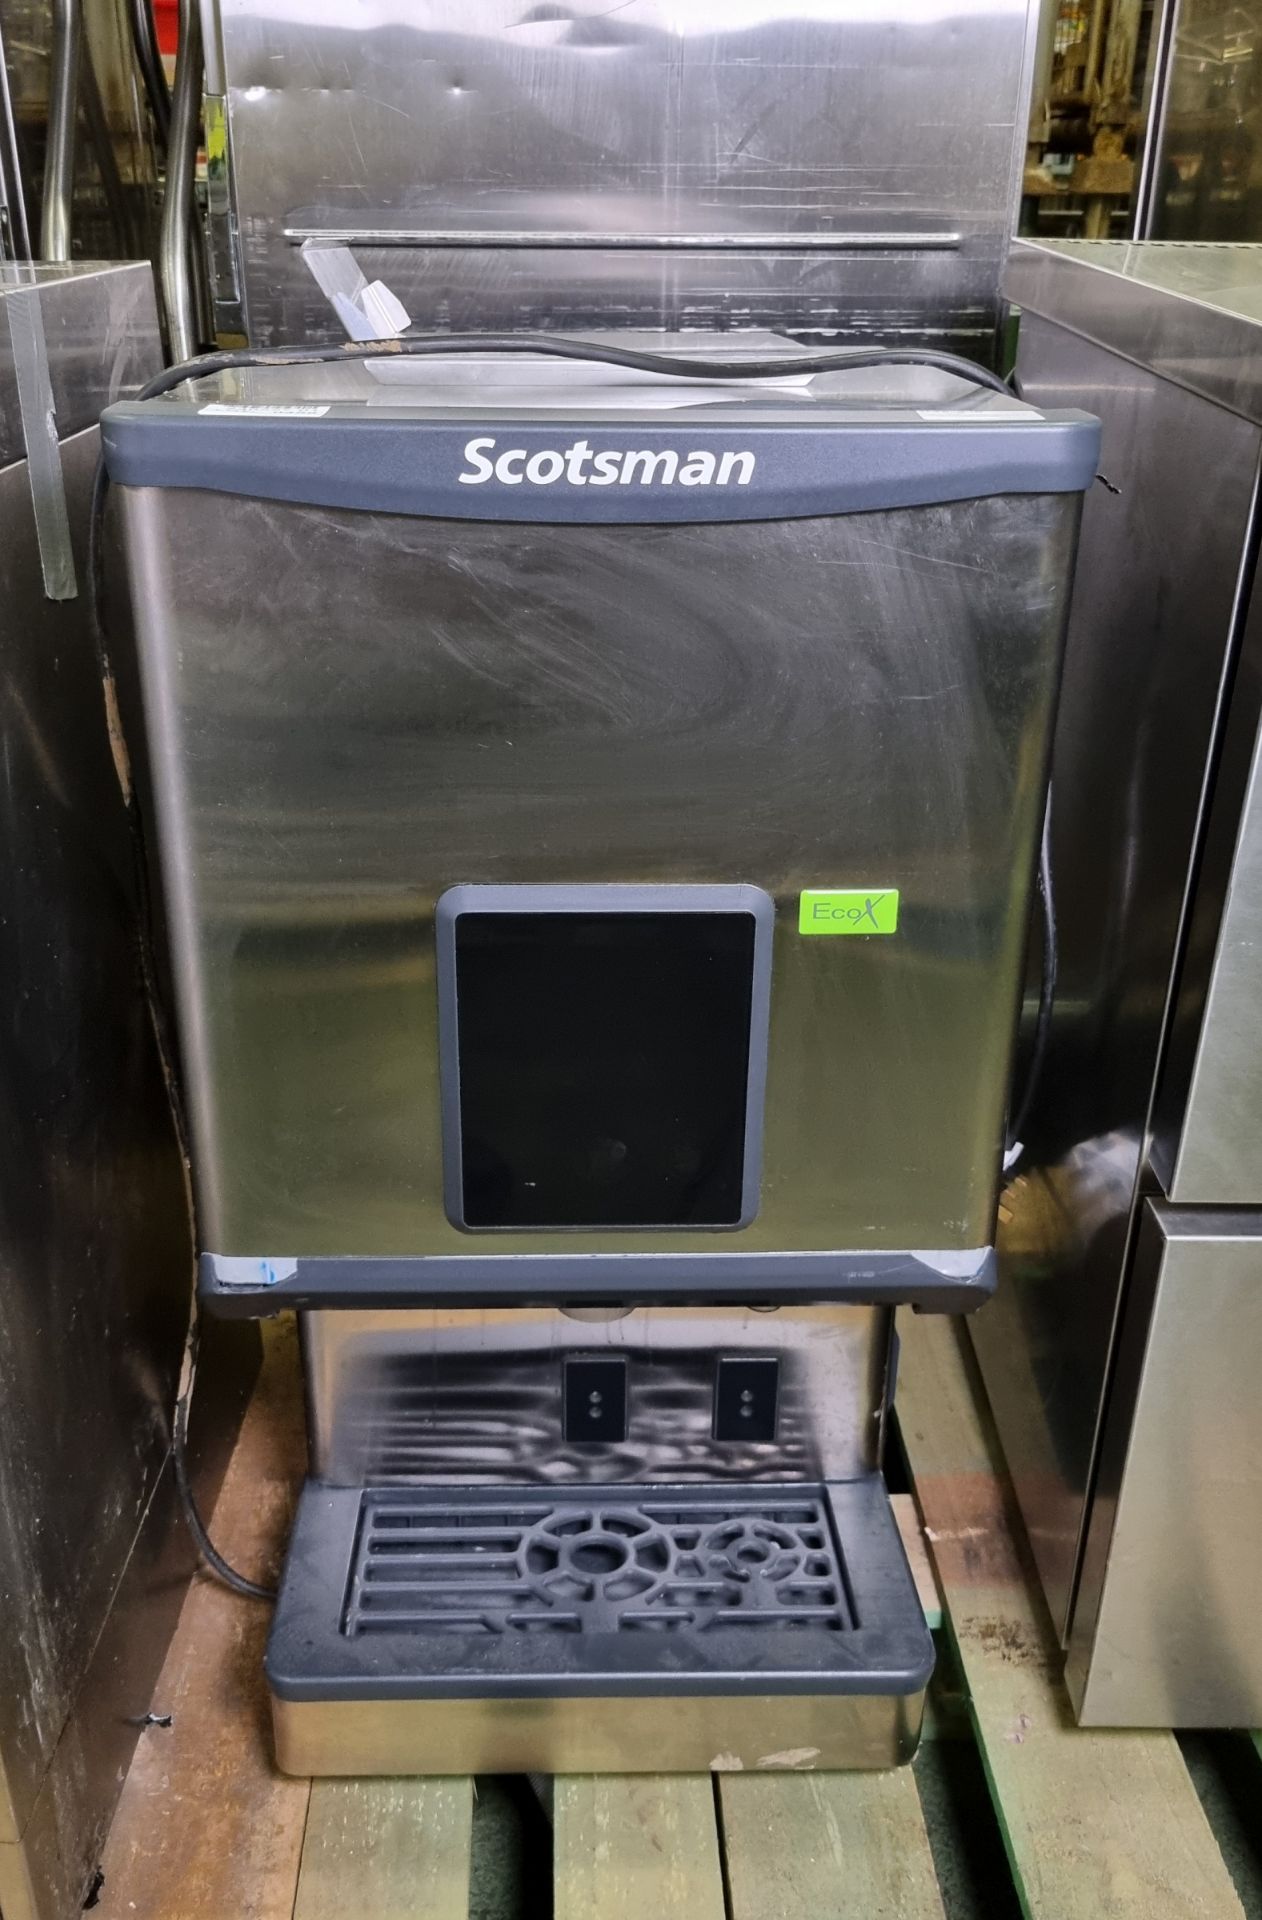 Scotsman DXN 207 Eco X countertop ice machine / dispenser